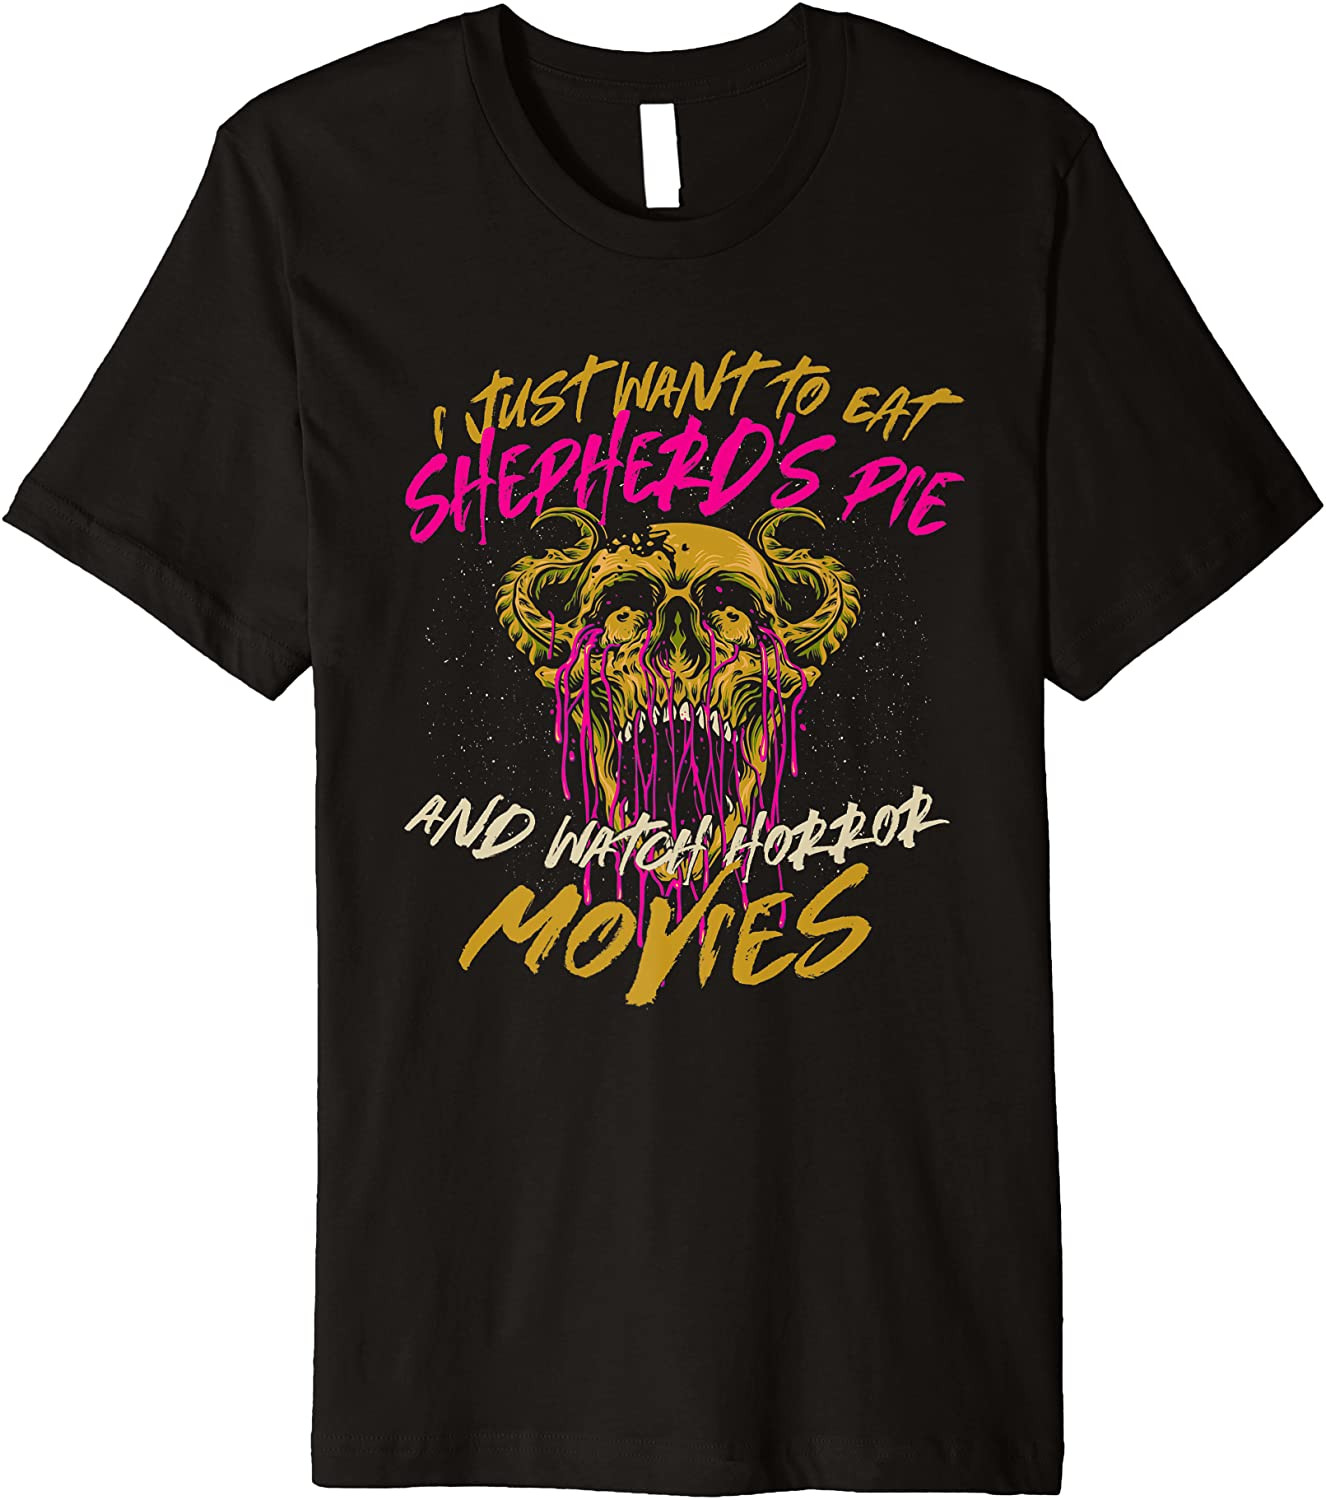 Eat Shepherd's Pie And Watch Horror Movies Comfort Food T-Shirt